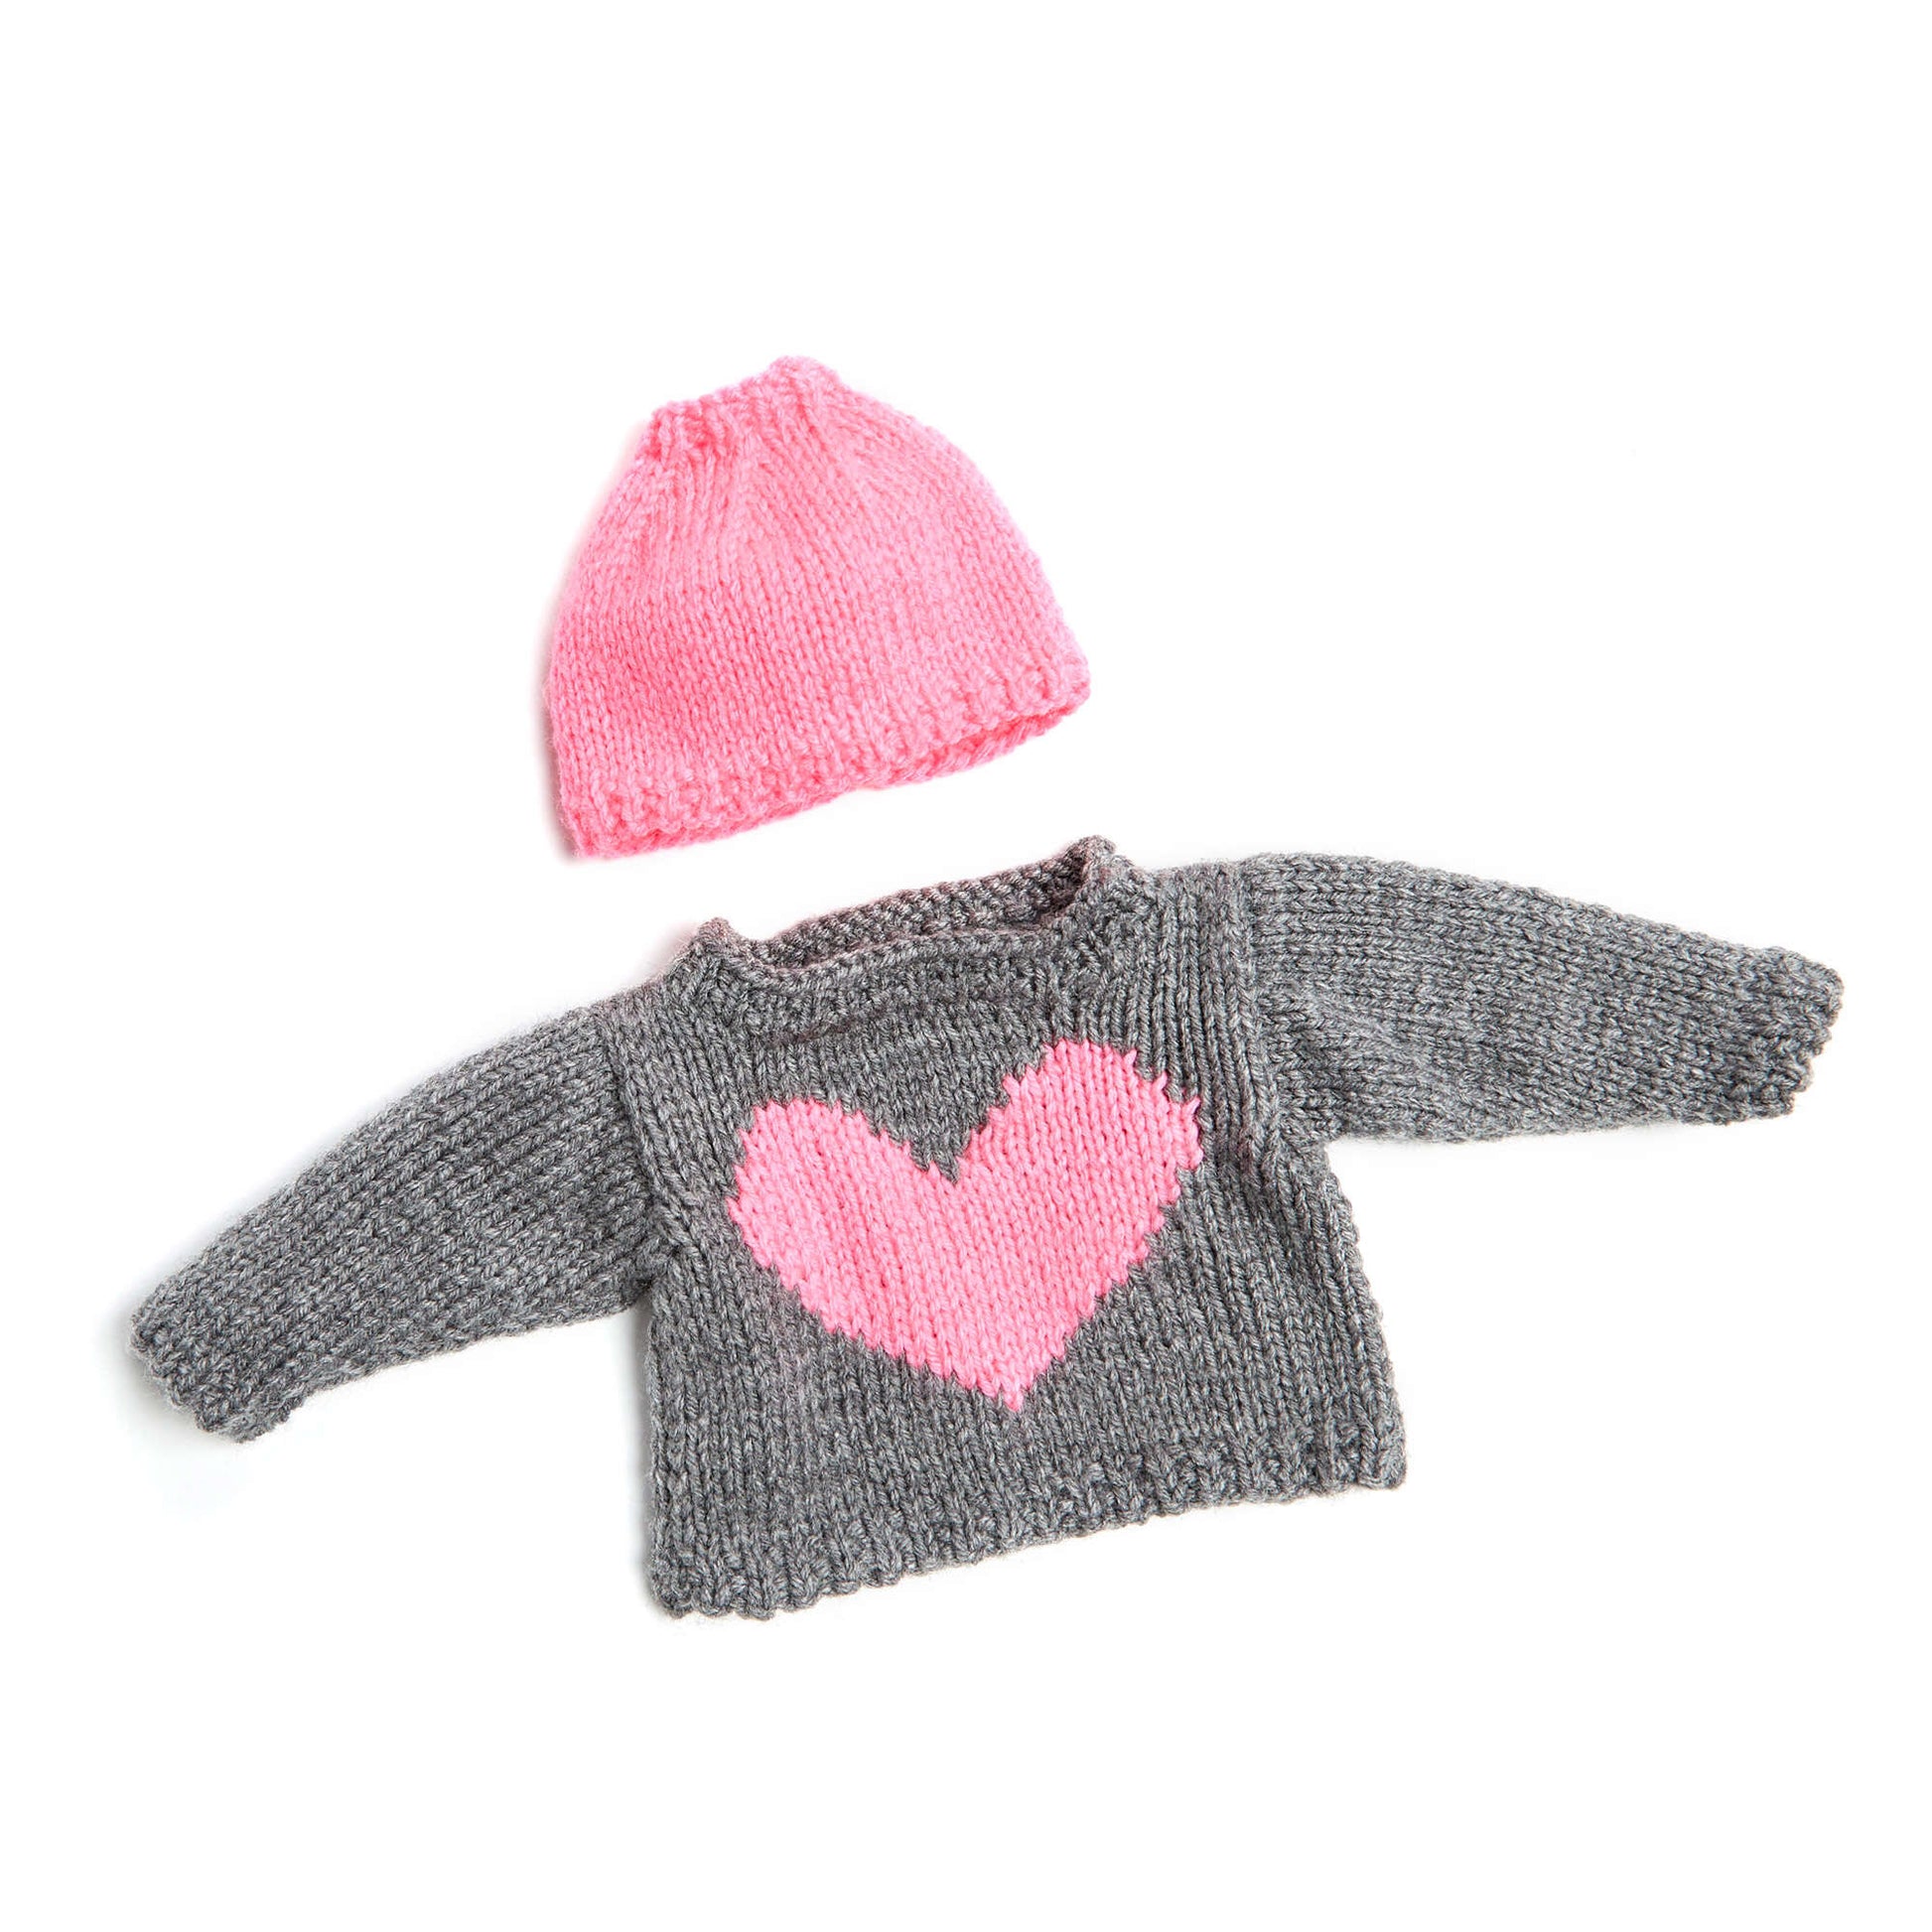 Free Red Heart Love My Doll Sweater & Messy Bun Hat Knit Pattern